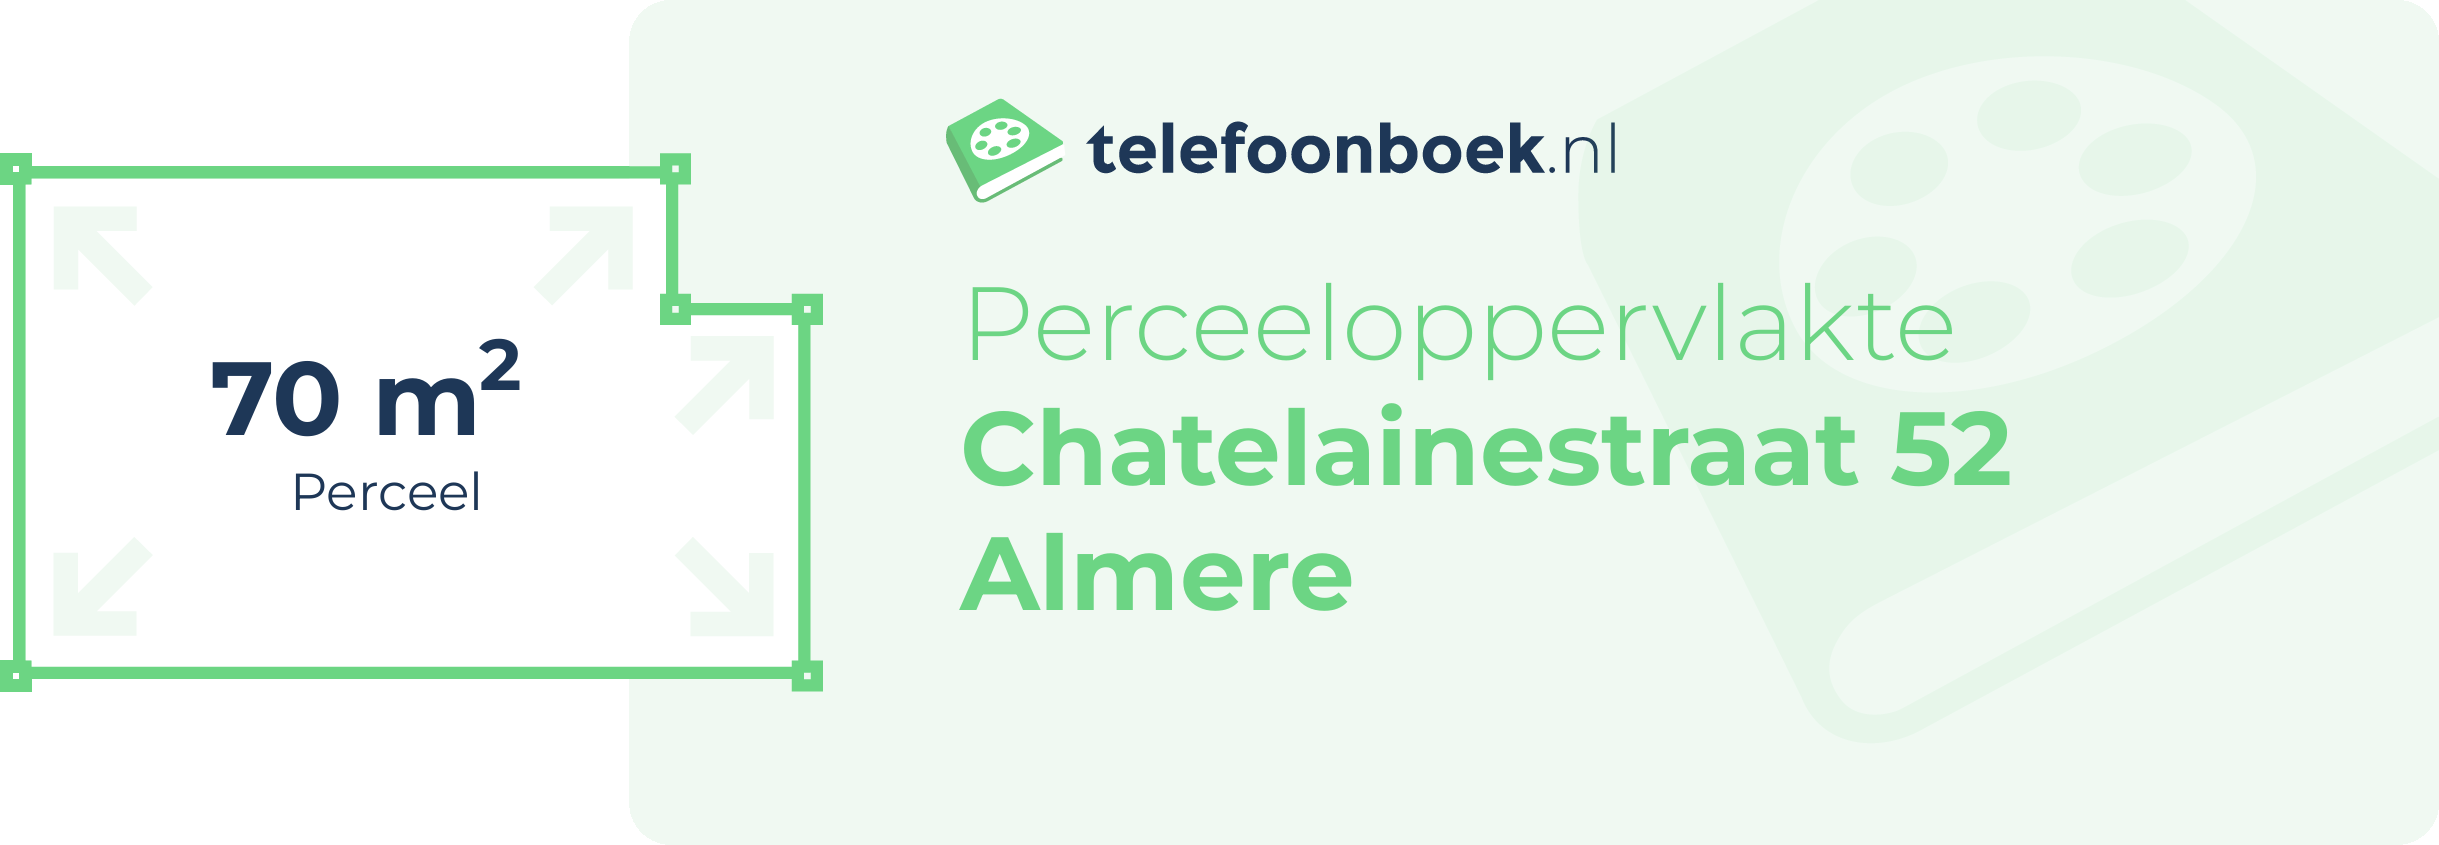 Perceeloppervlakte Chatelainestraat 52 Almere